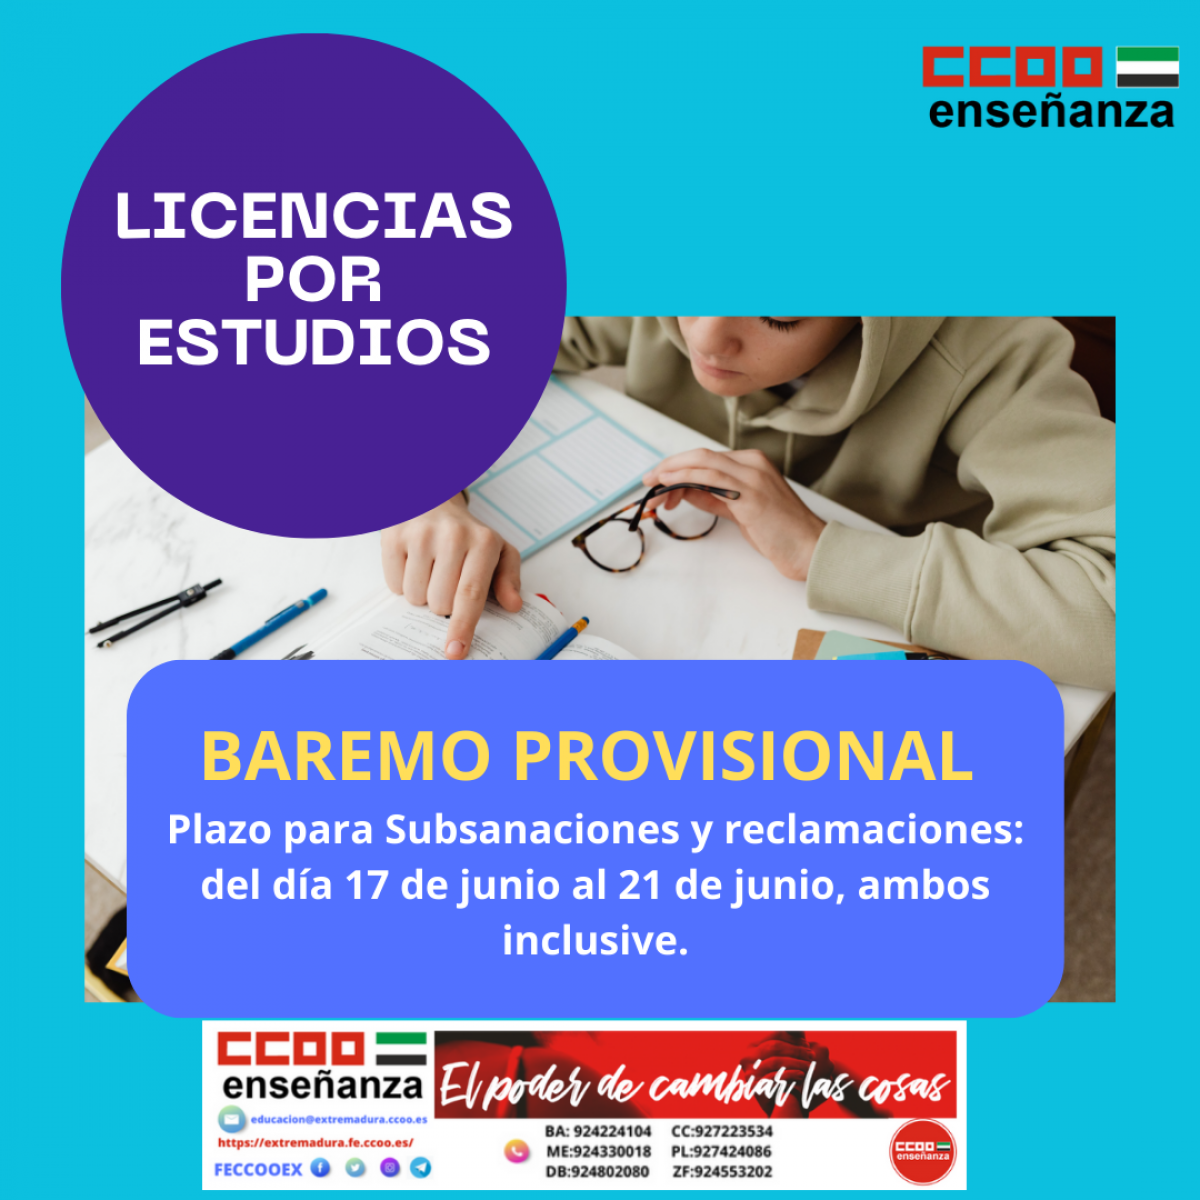 Baremo provisional licencias por estudios